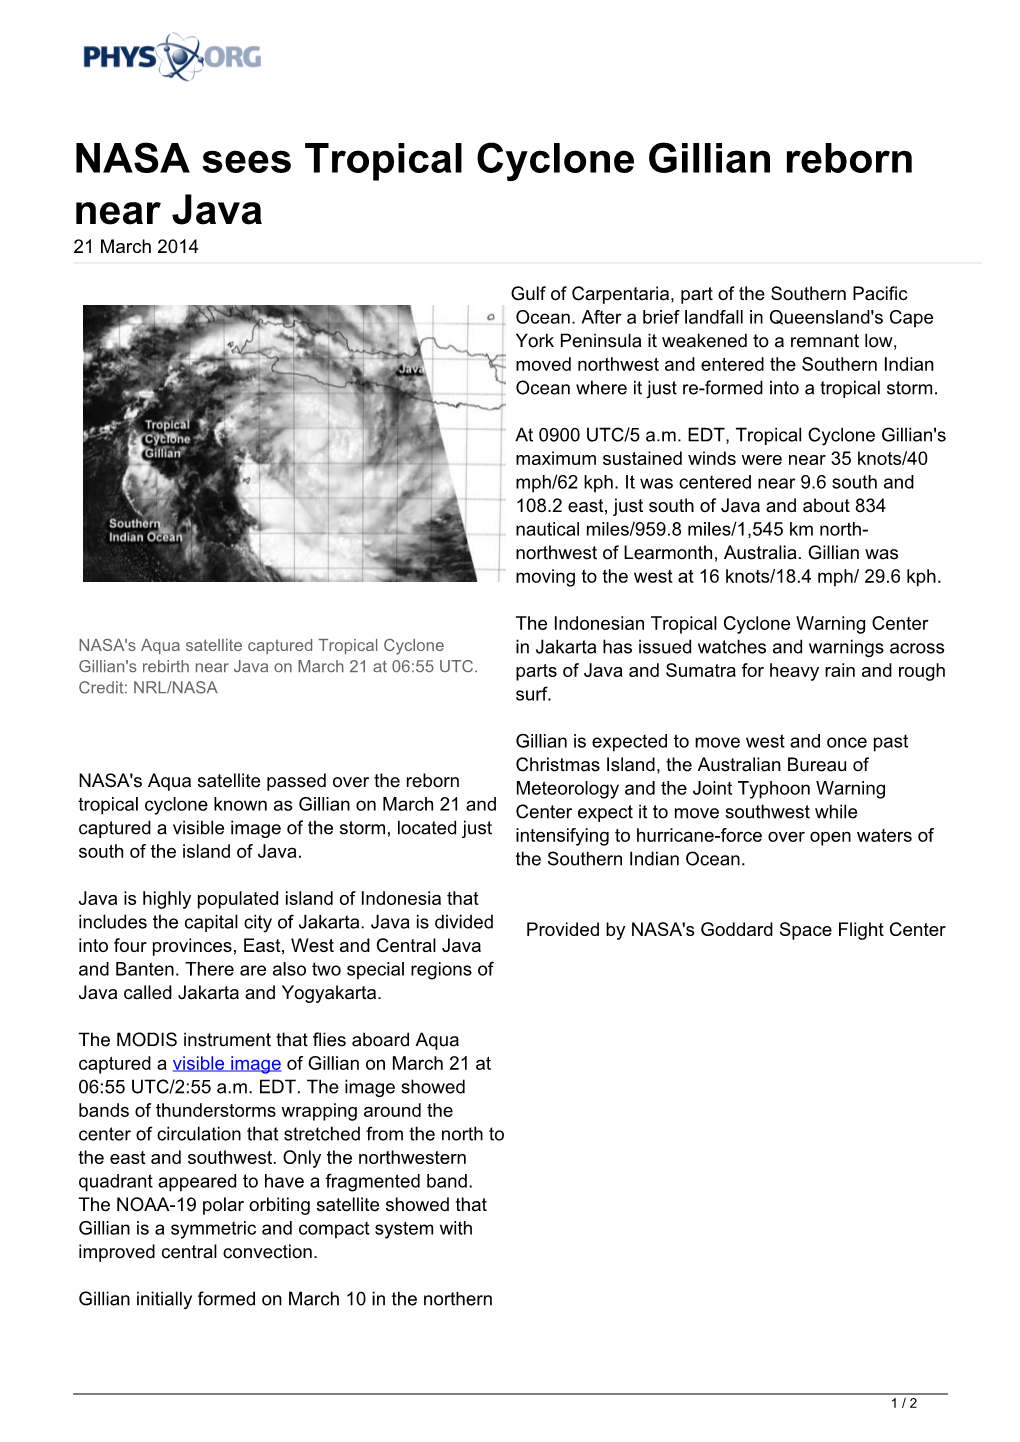 NASA Sees Tropical Cyclone Gillian Reborn Near Java 21 March 2014